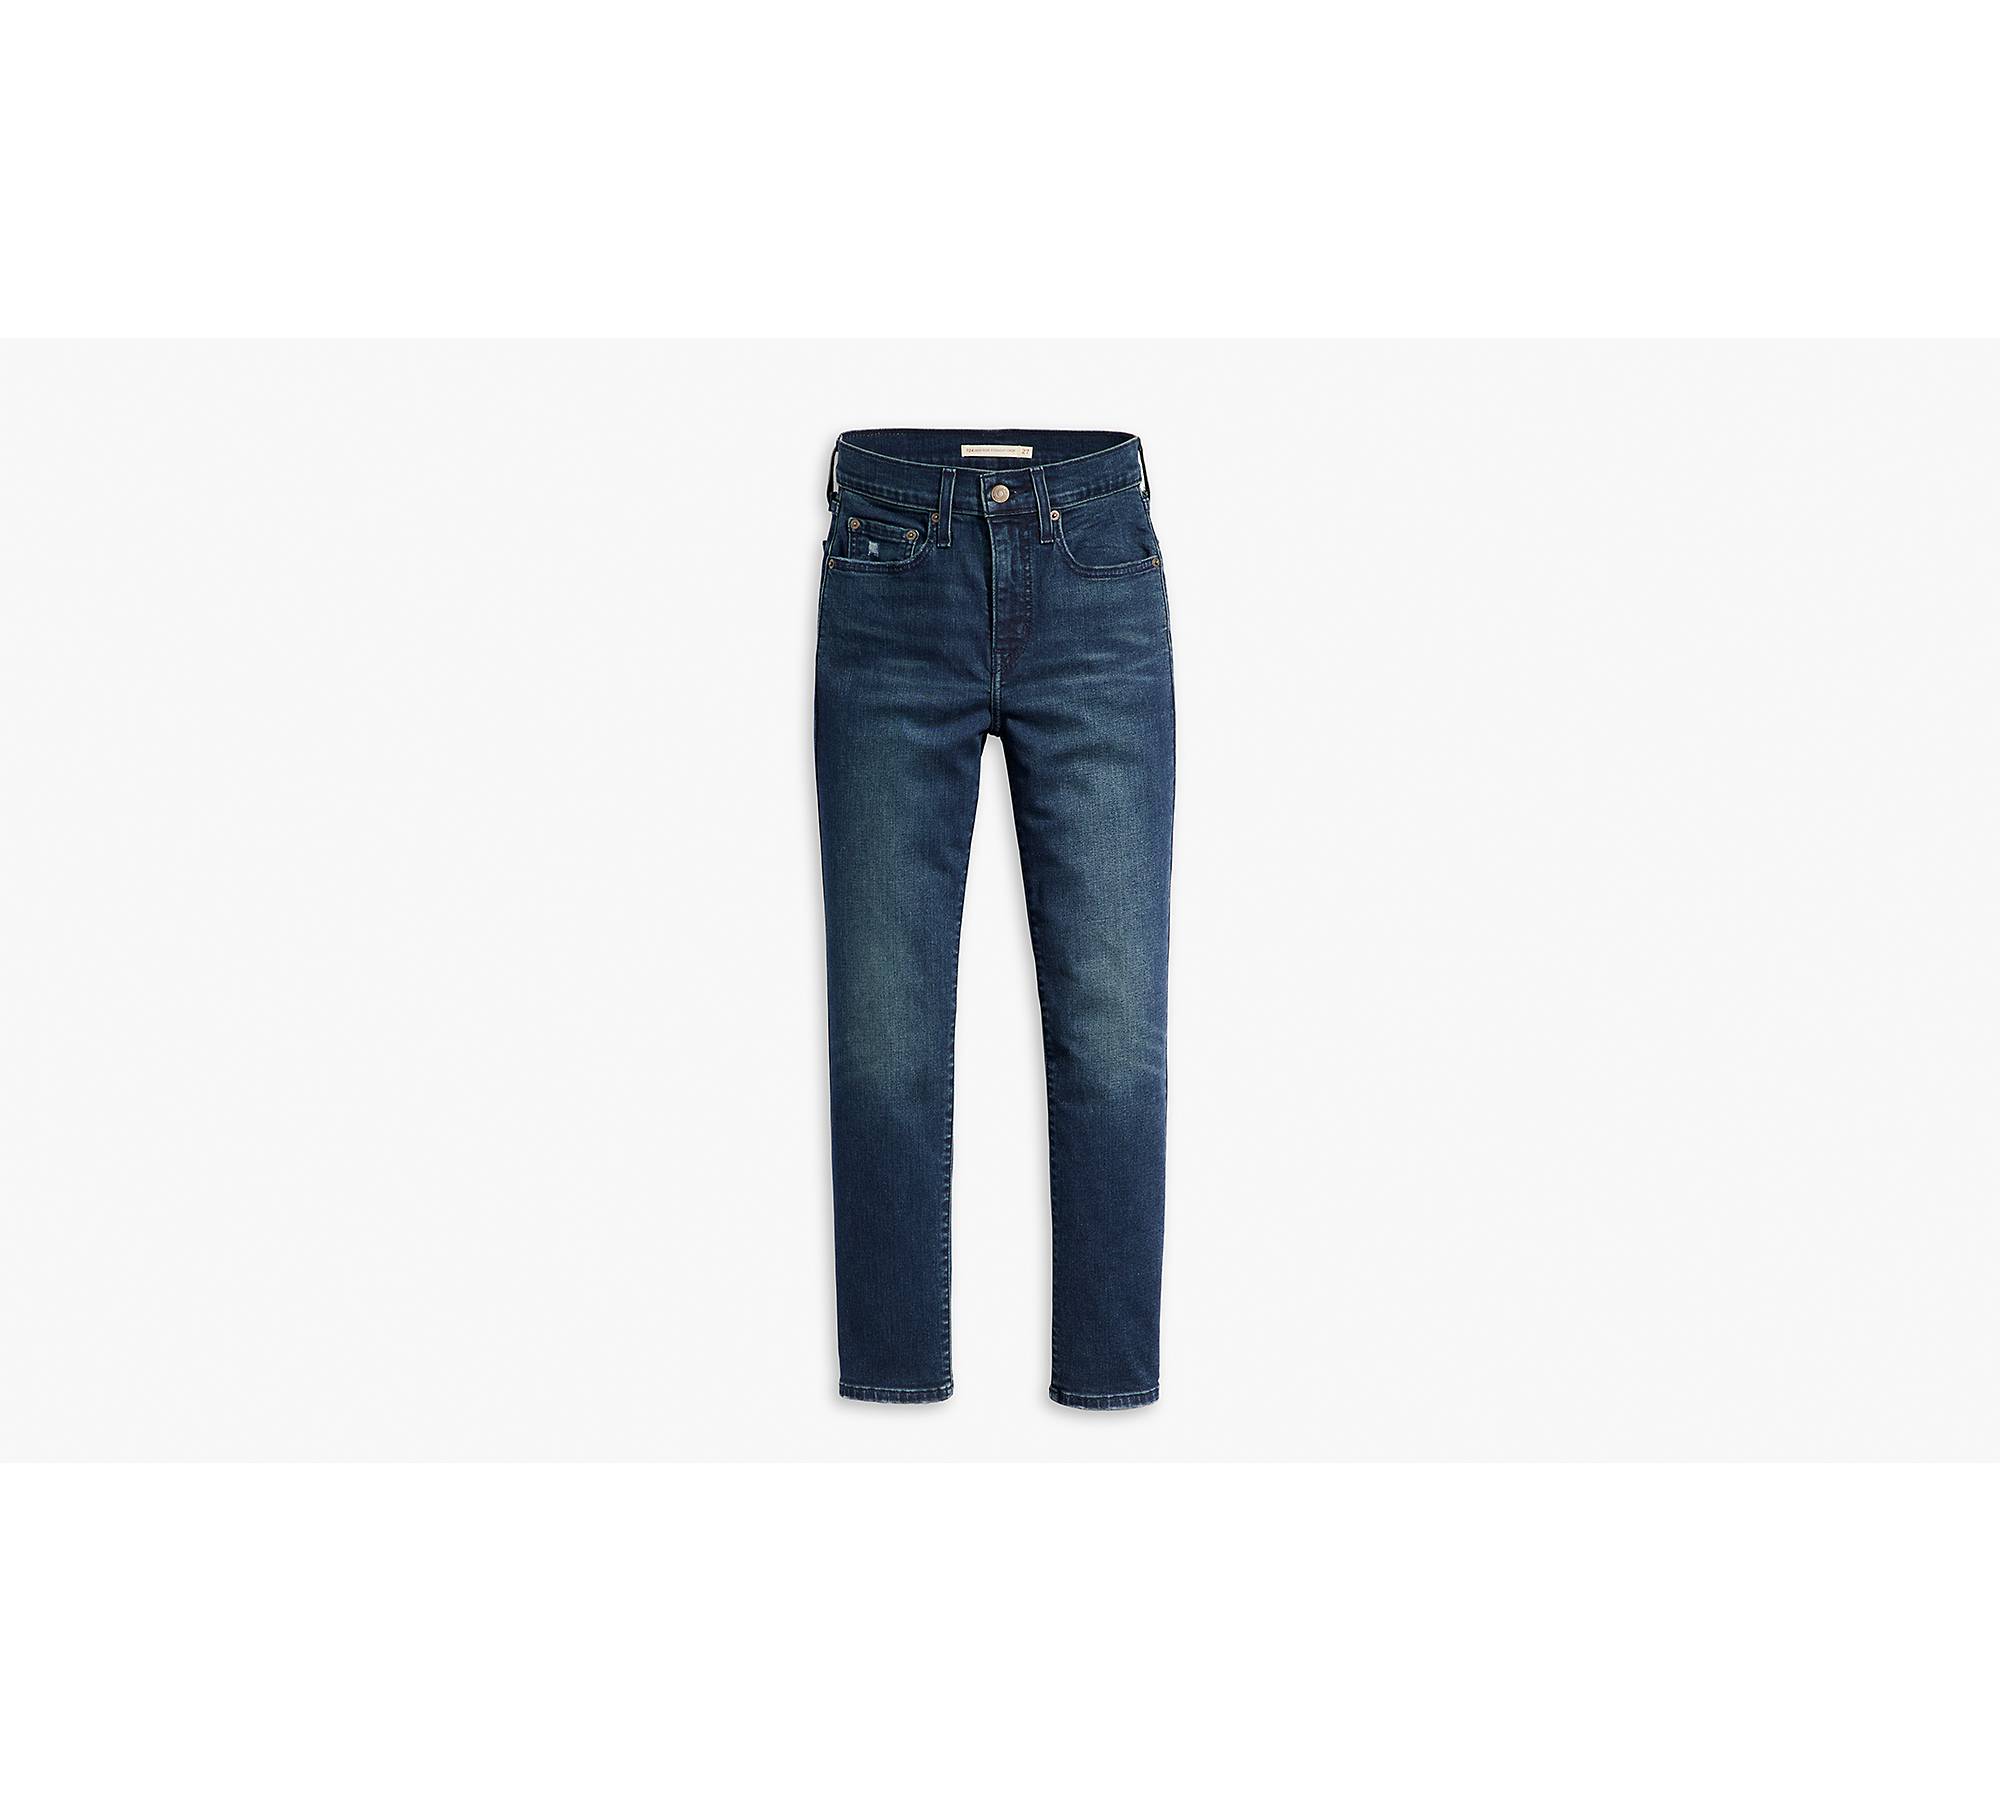 Lauren Jeans Co Women's Jeans Size 6 Black Straight Leg - beyond